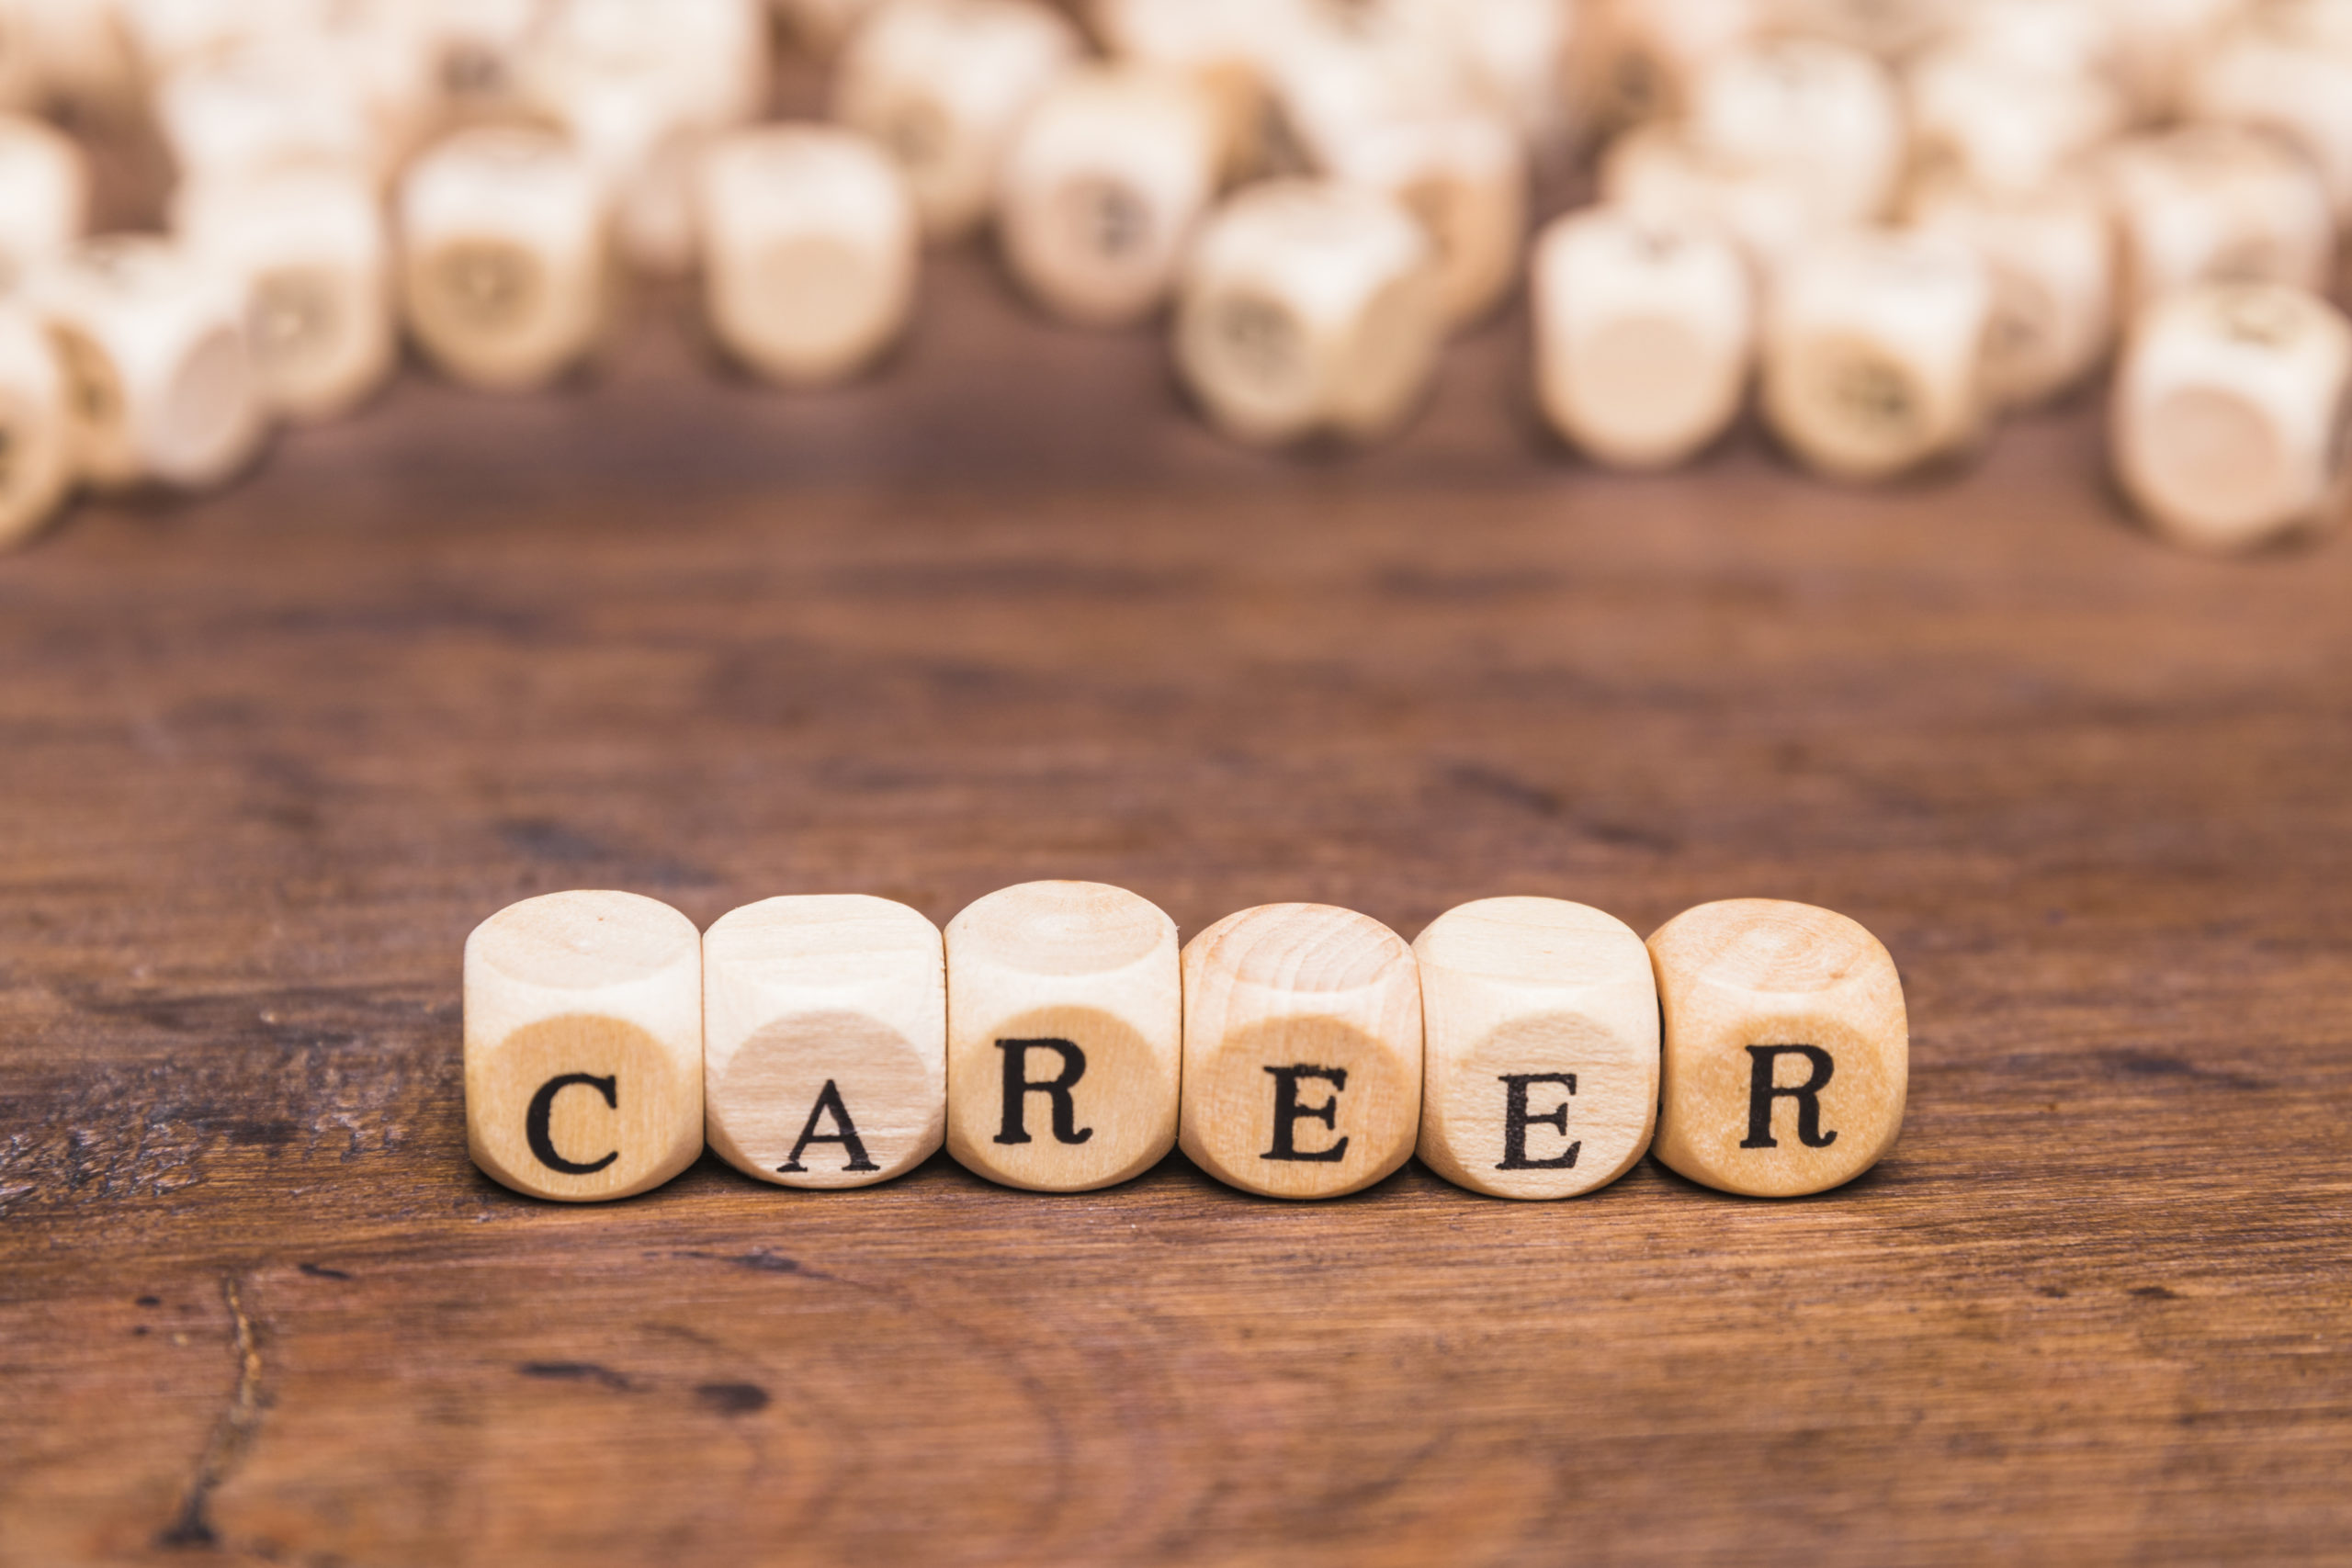 wooden dice spelling "career"